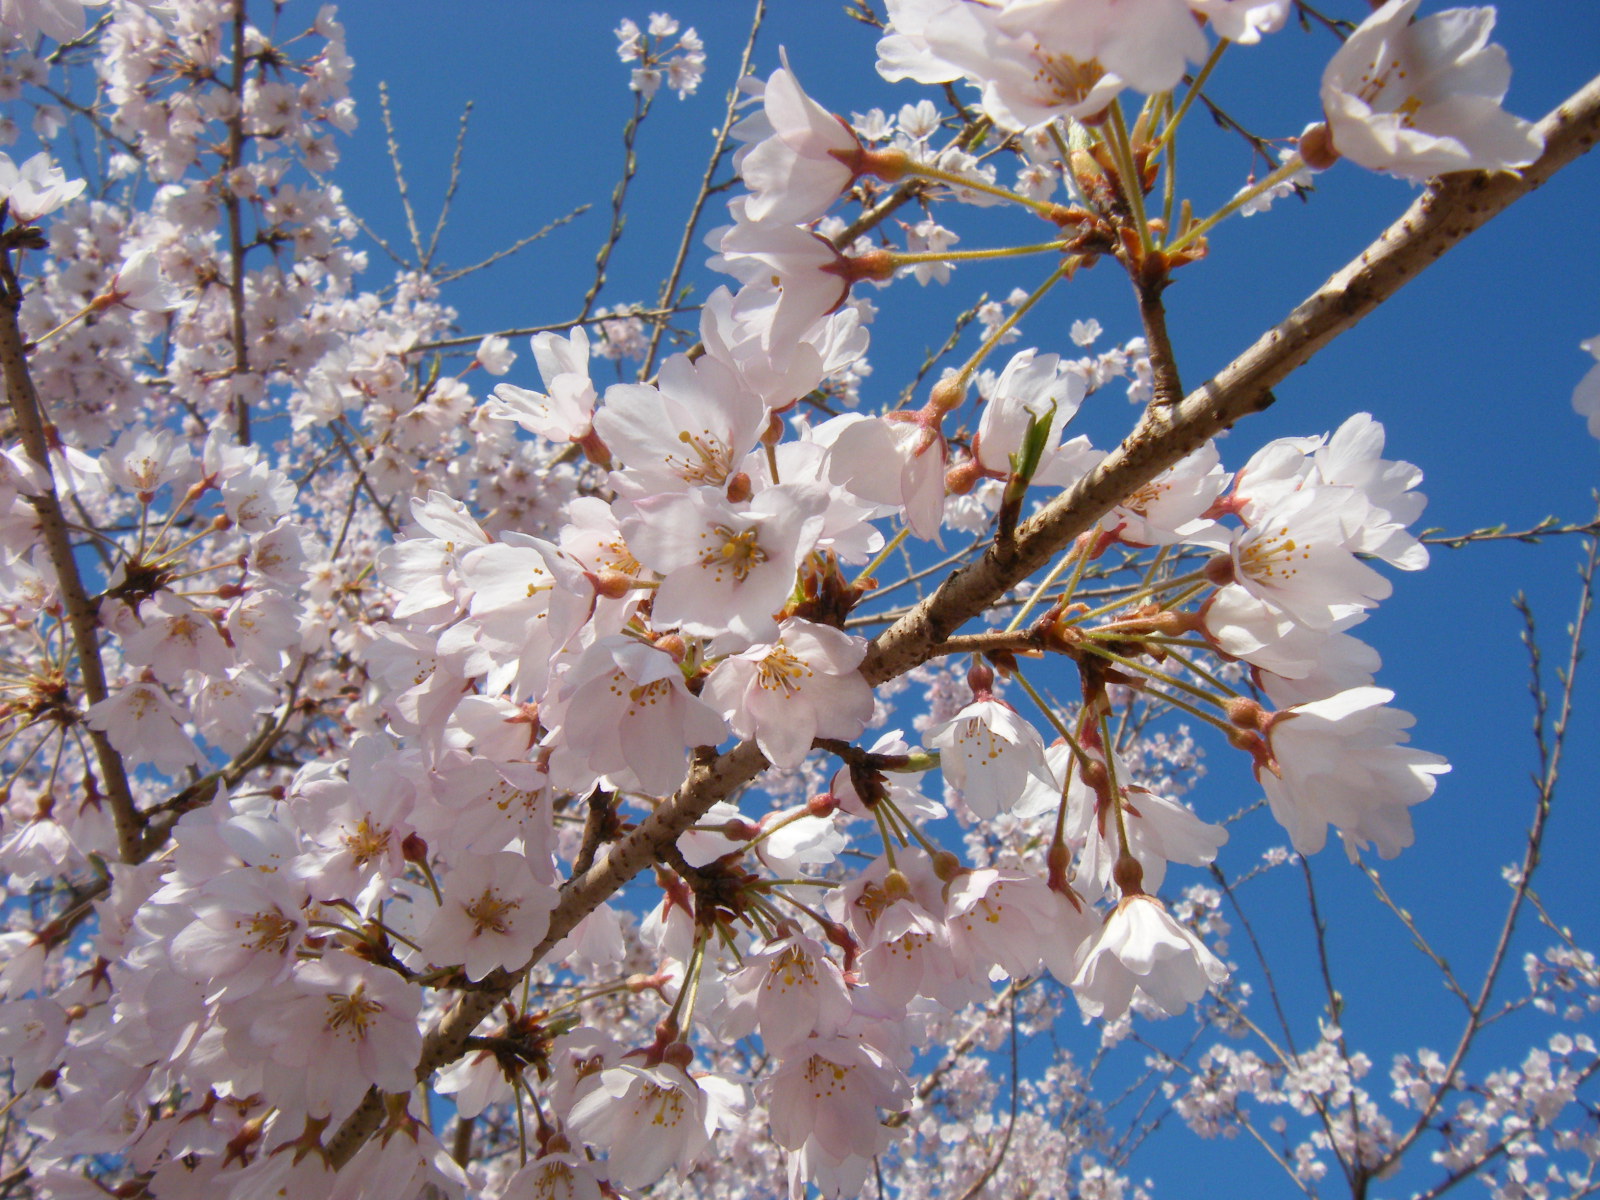  愛宕神社の桜2 